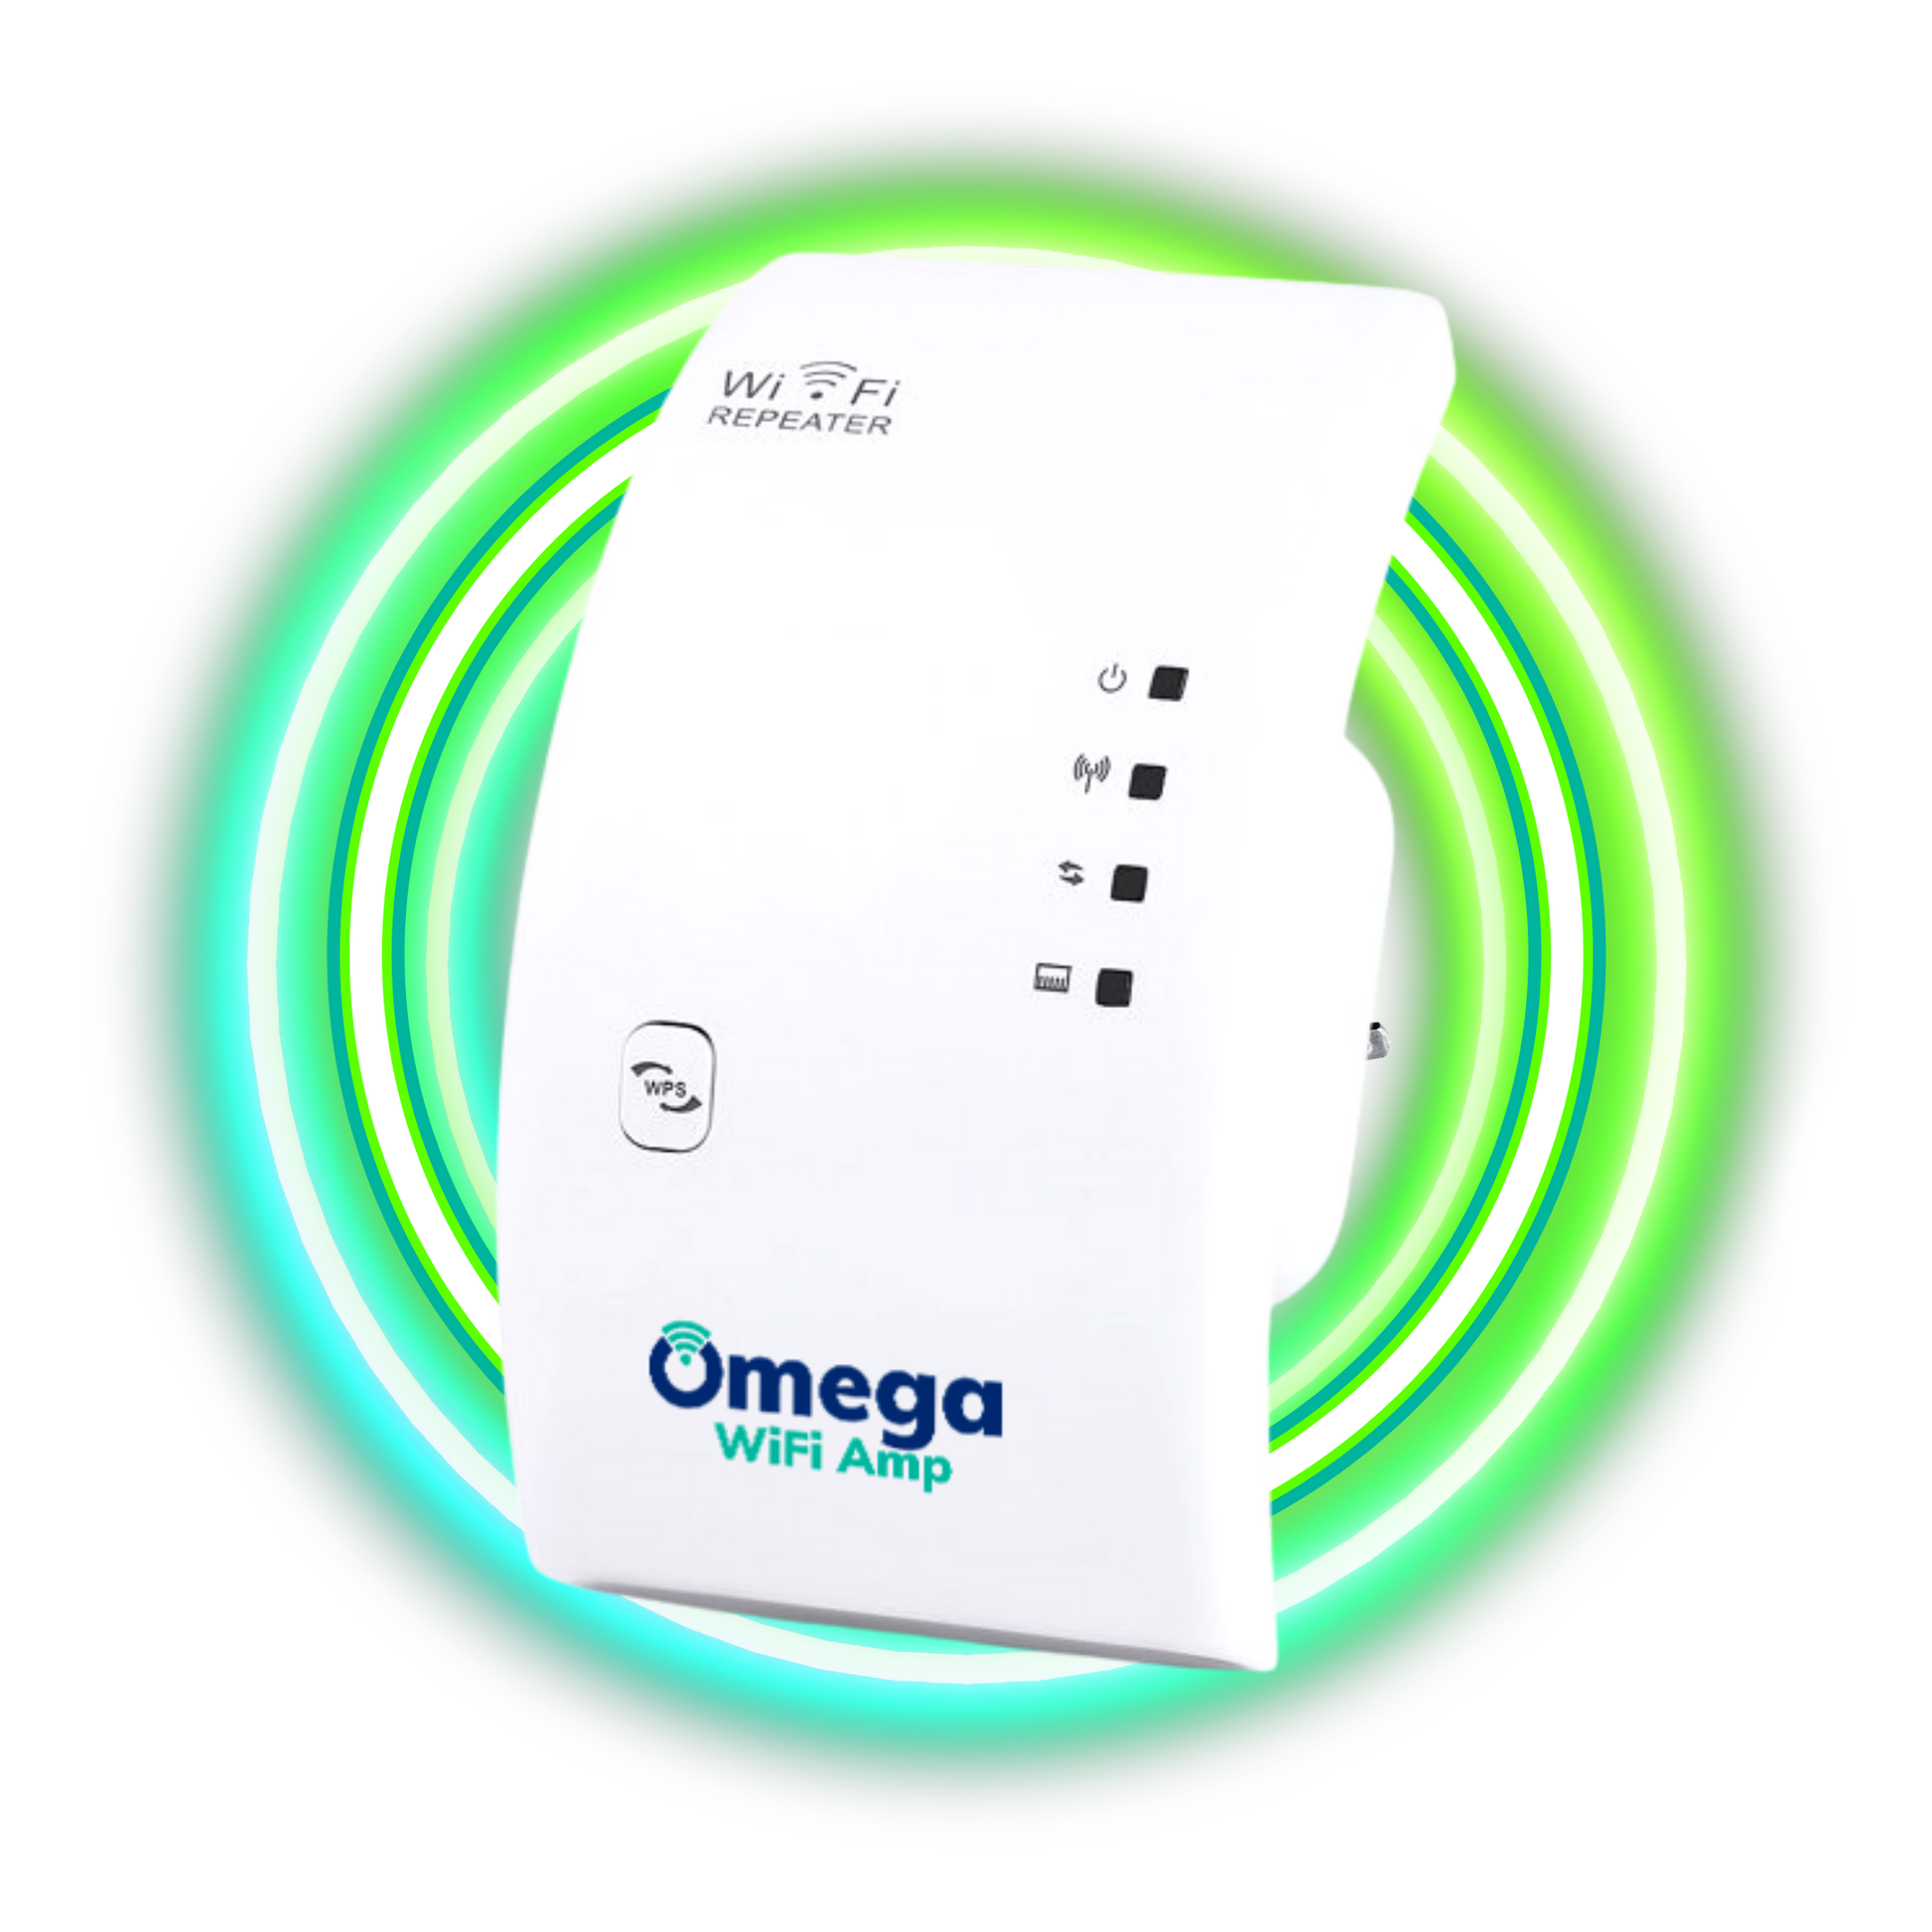 Omega WiFi Amp - The Ultimate Wi-Fi Booster